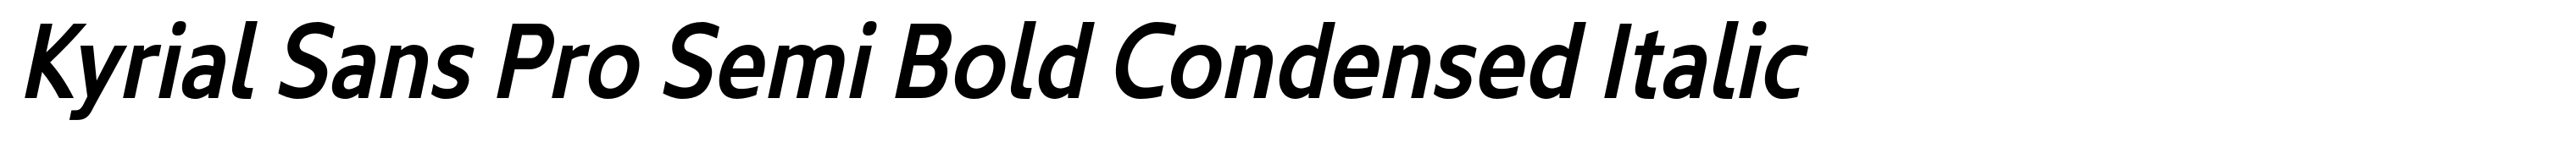 Kyrial Sans Pro Semi Bold Condensed Italic